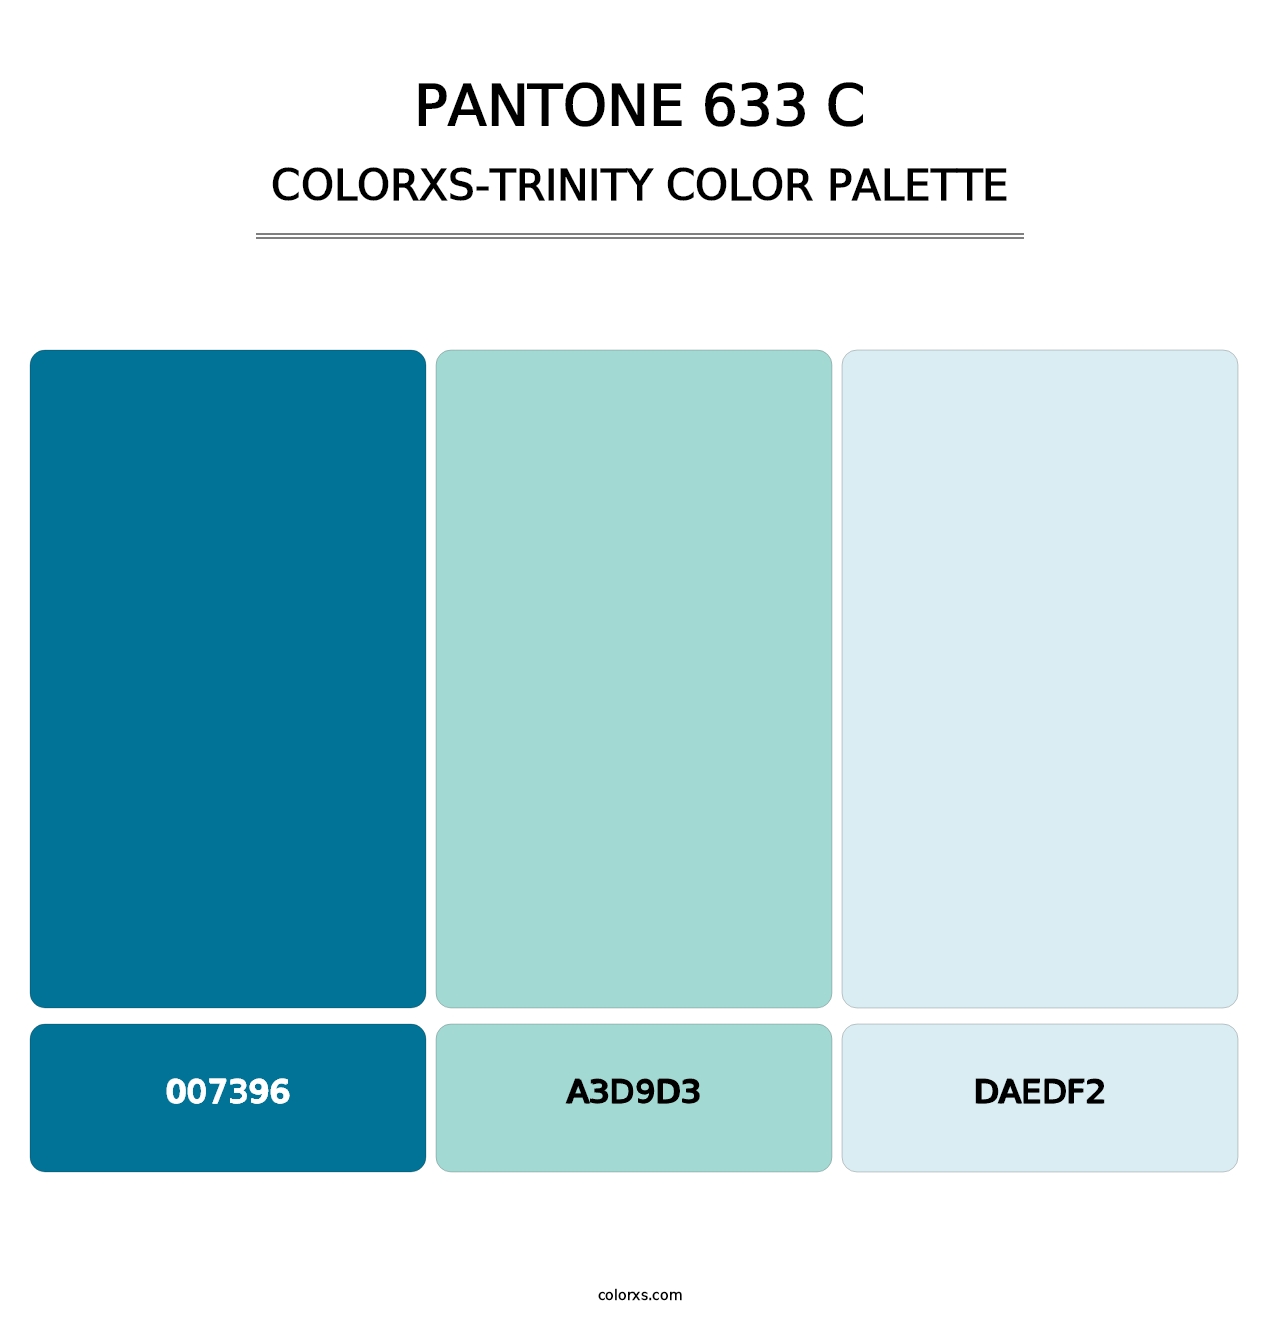 PANTONE 633 C - Colorxs Trinity Palette